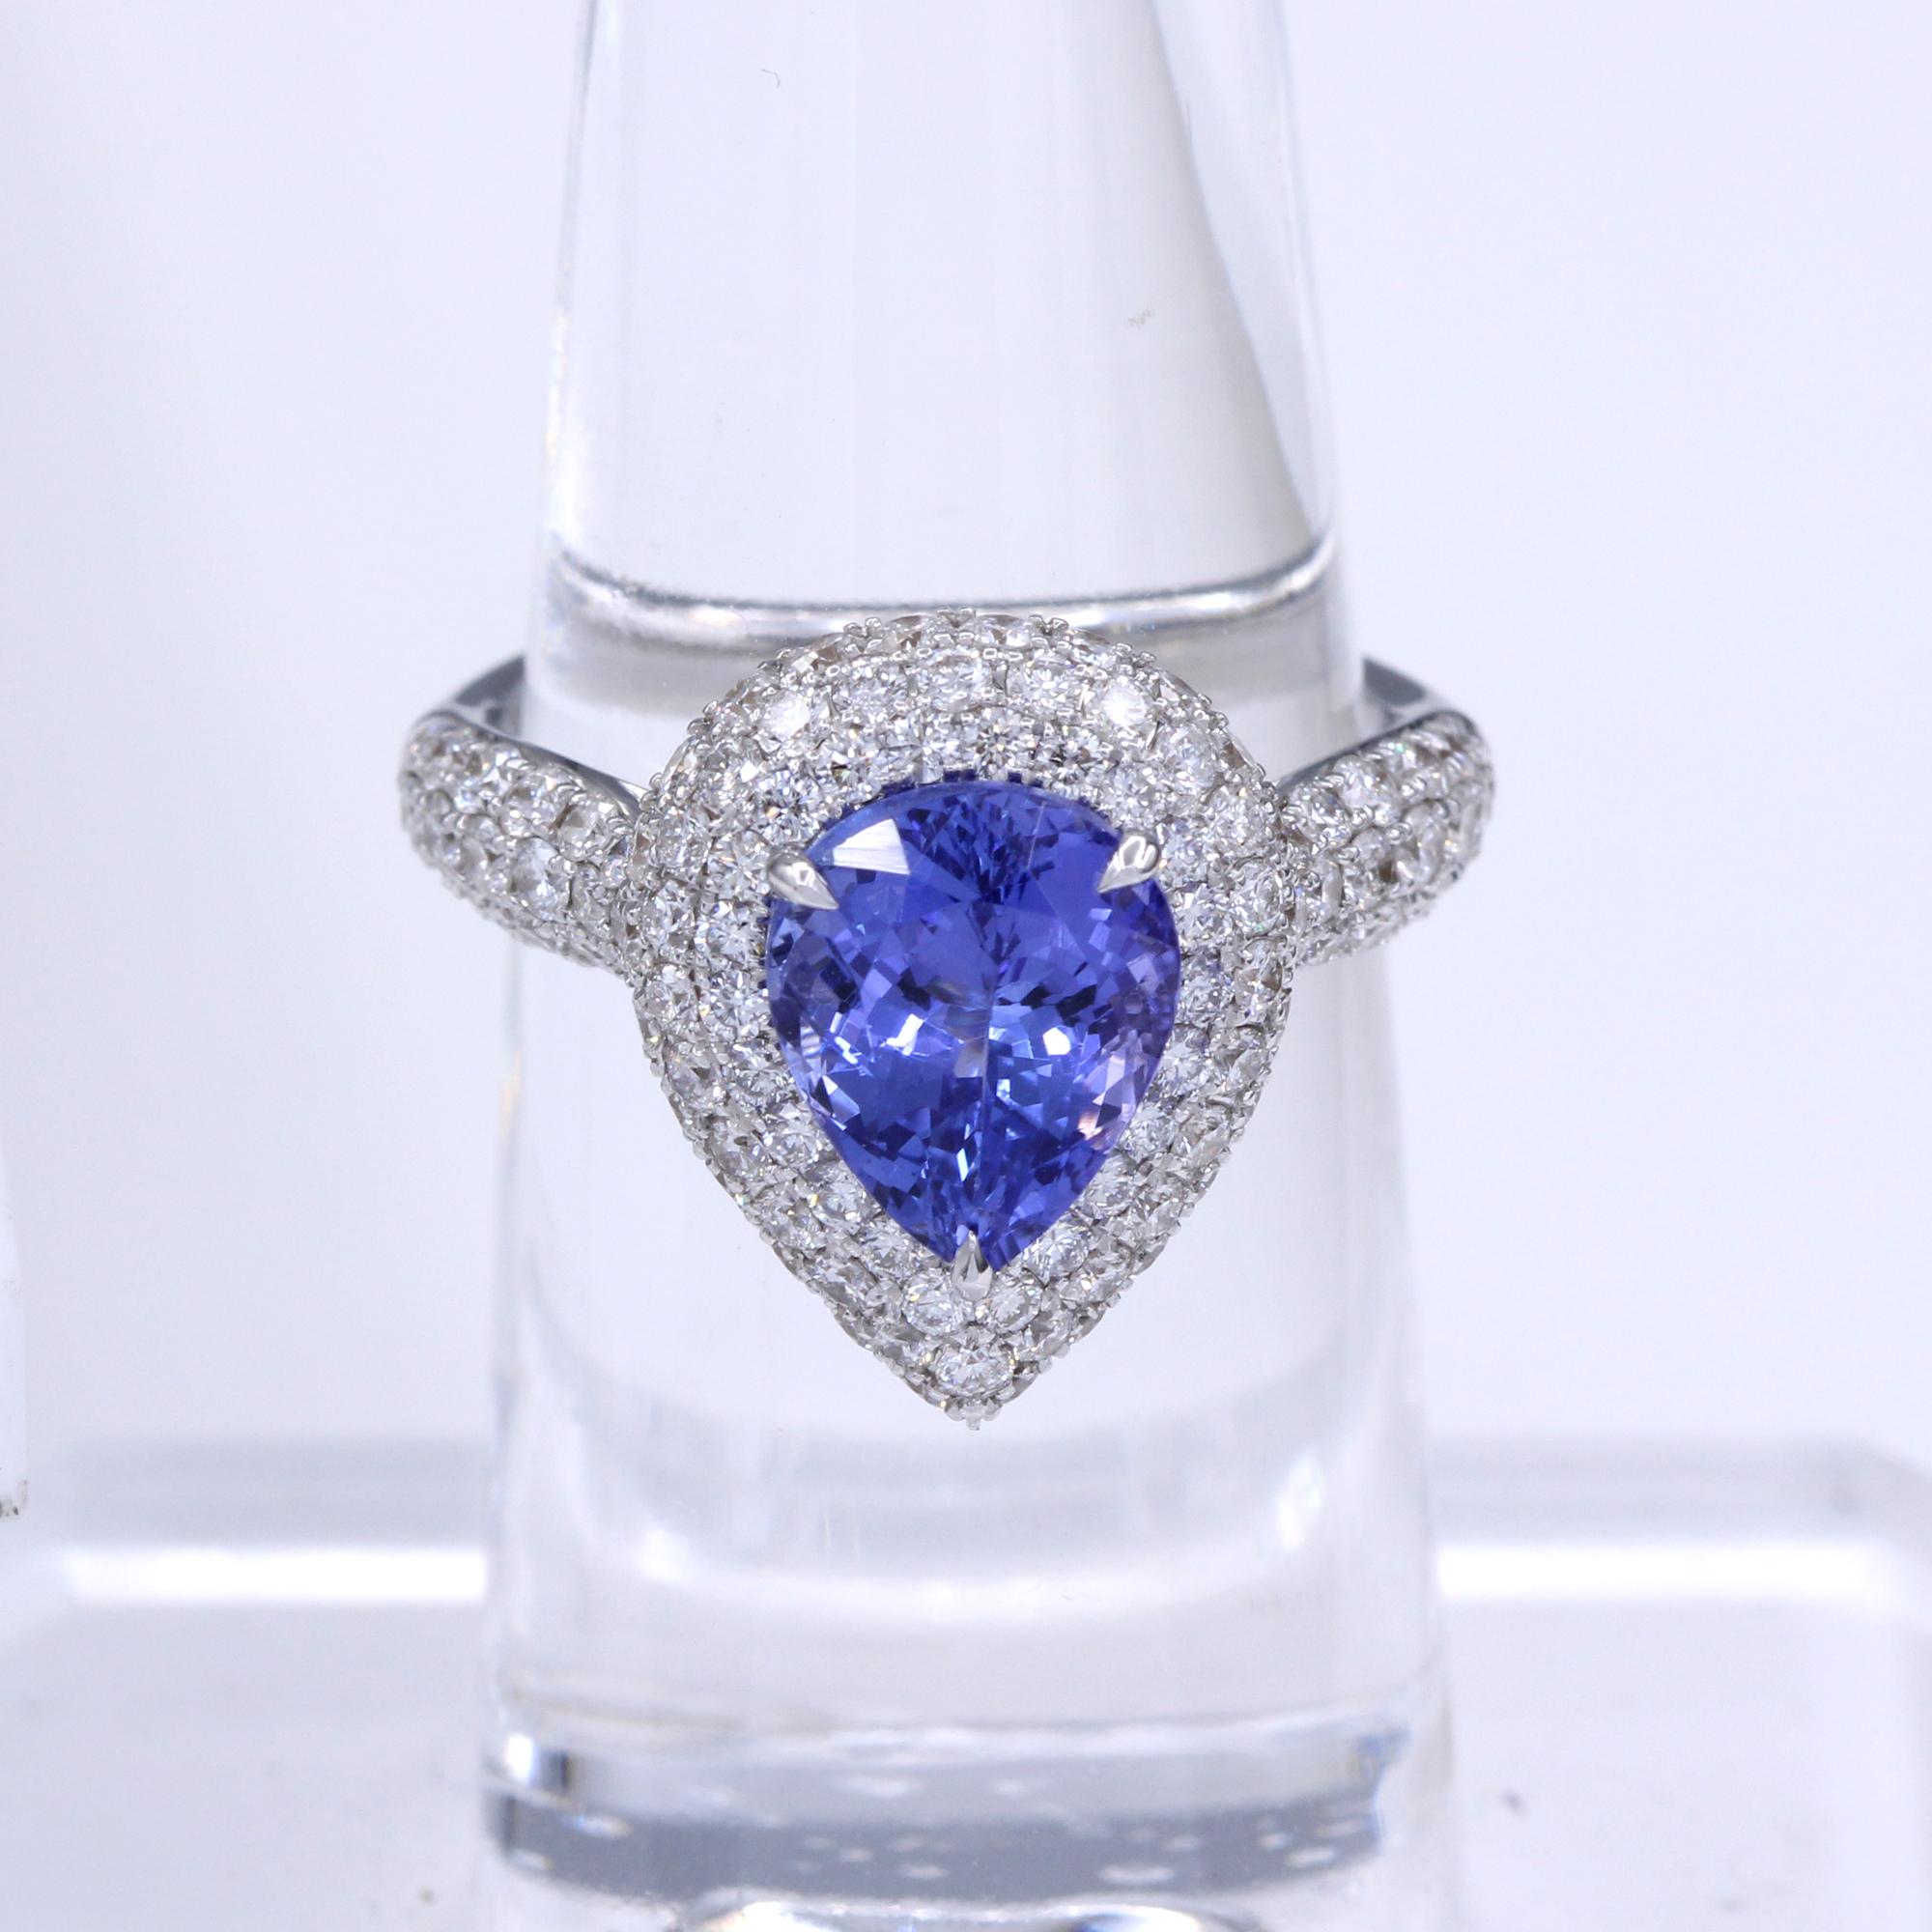 Fancy Tanzanite Ring & Diamonds, Pear Shape Tanzanite AAA brilliant deep purple 3.28 carat 10 x 8 mm.
Total all Diamonds 1.78 carat G-SI, 18k White Gold 7.0 Grams, Finger Size 7.